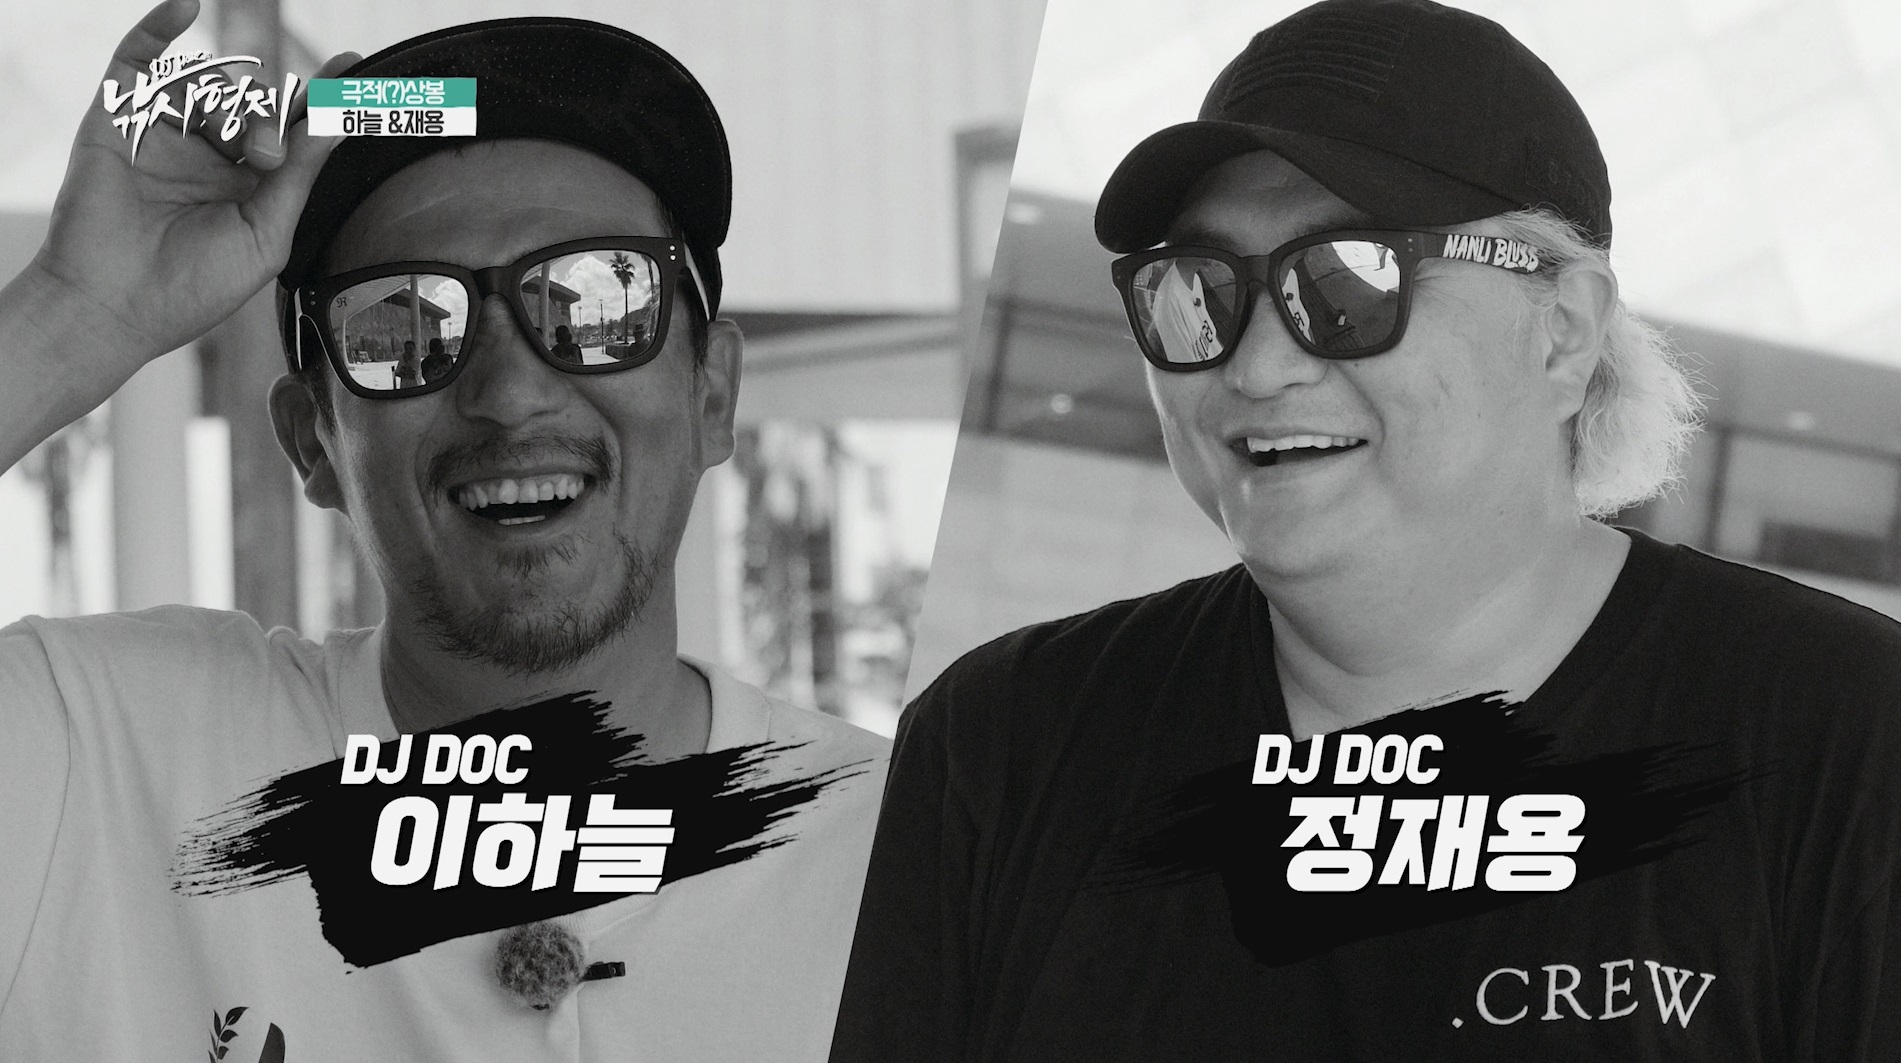 ‘DJ DOC의 낚시형제’ 두 남자, 이하늘·정재용의 낚시 스타일 전격 분석